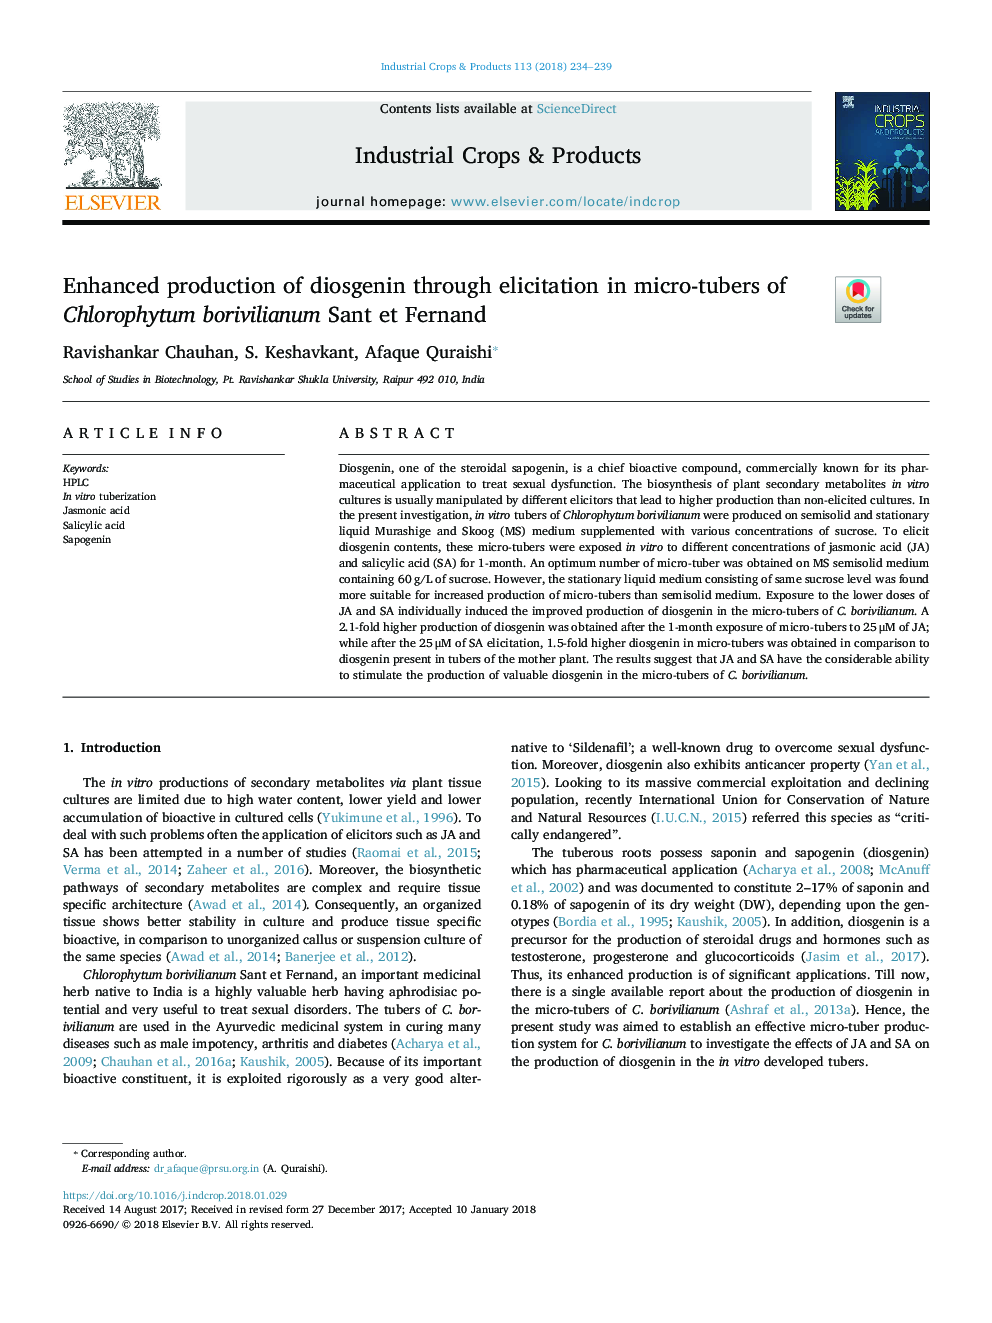 Enhanced production of diosgenin through elicitation in micro-tubers of Chlorophytum borivilianum Sant et Fernand